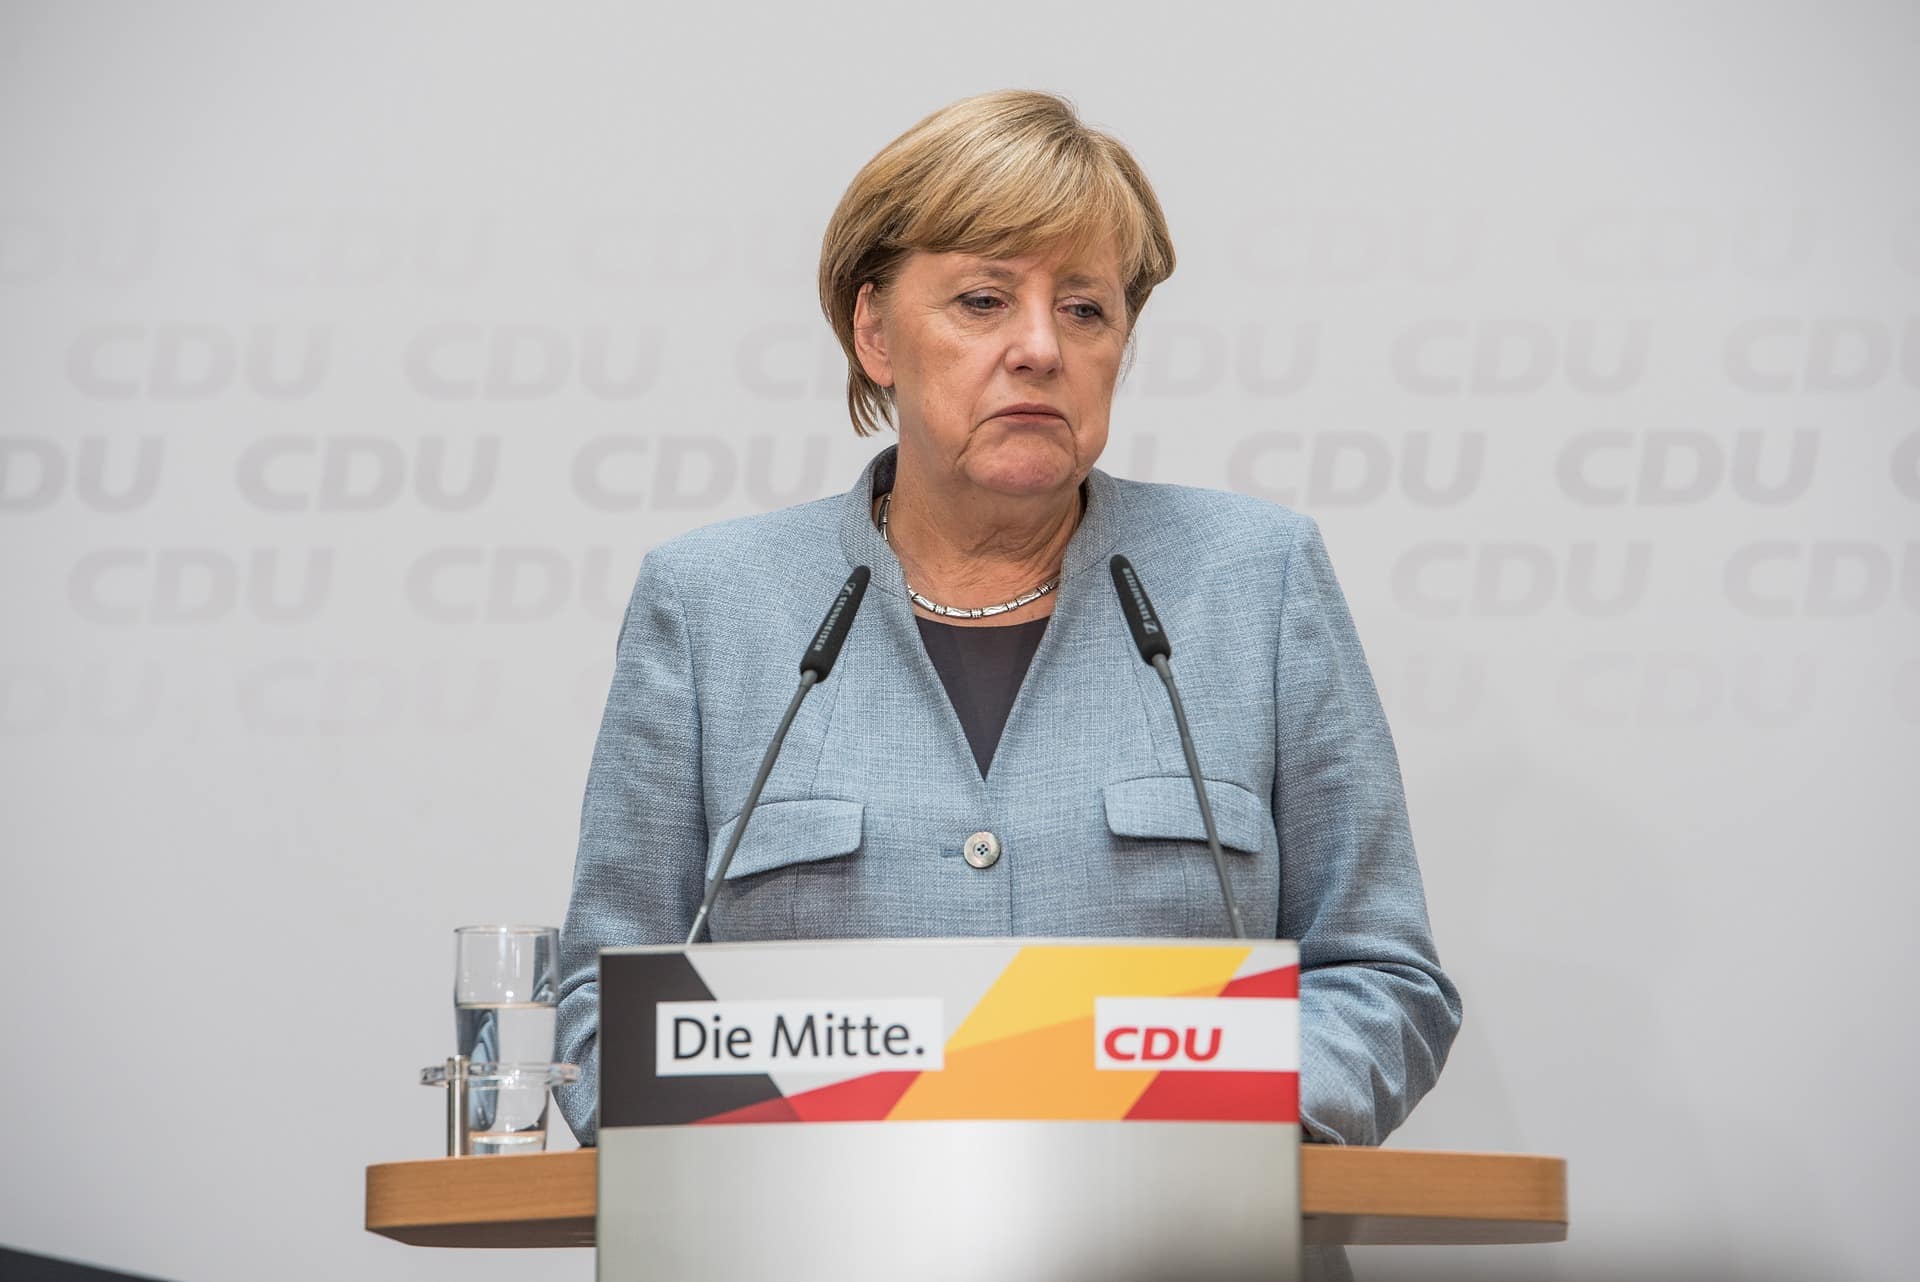 Angela Merkel, la chancelière immobile
SIPA